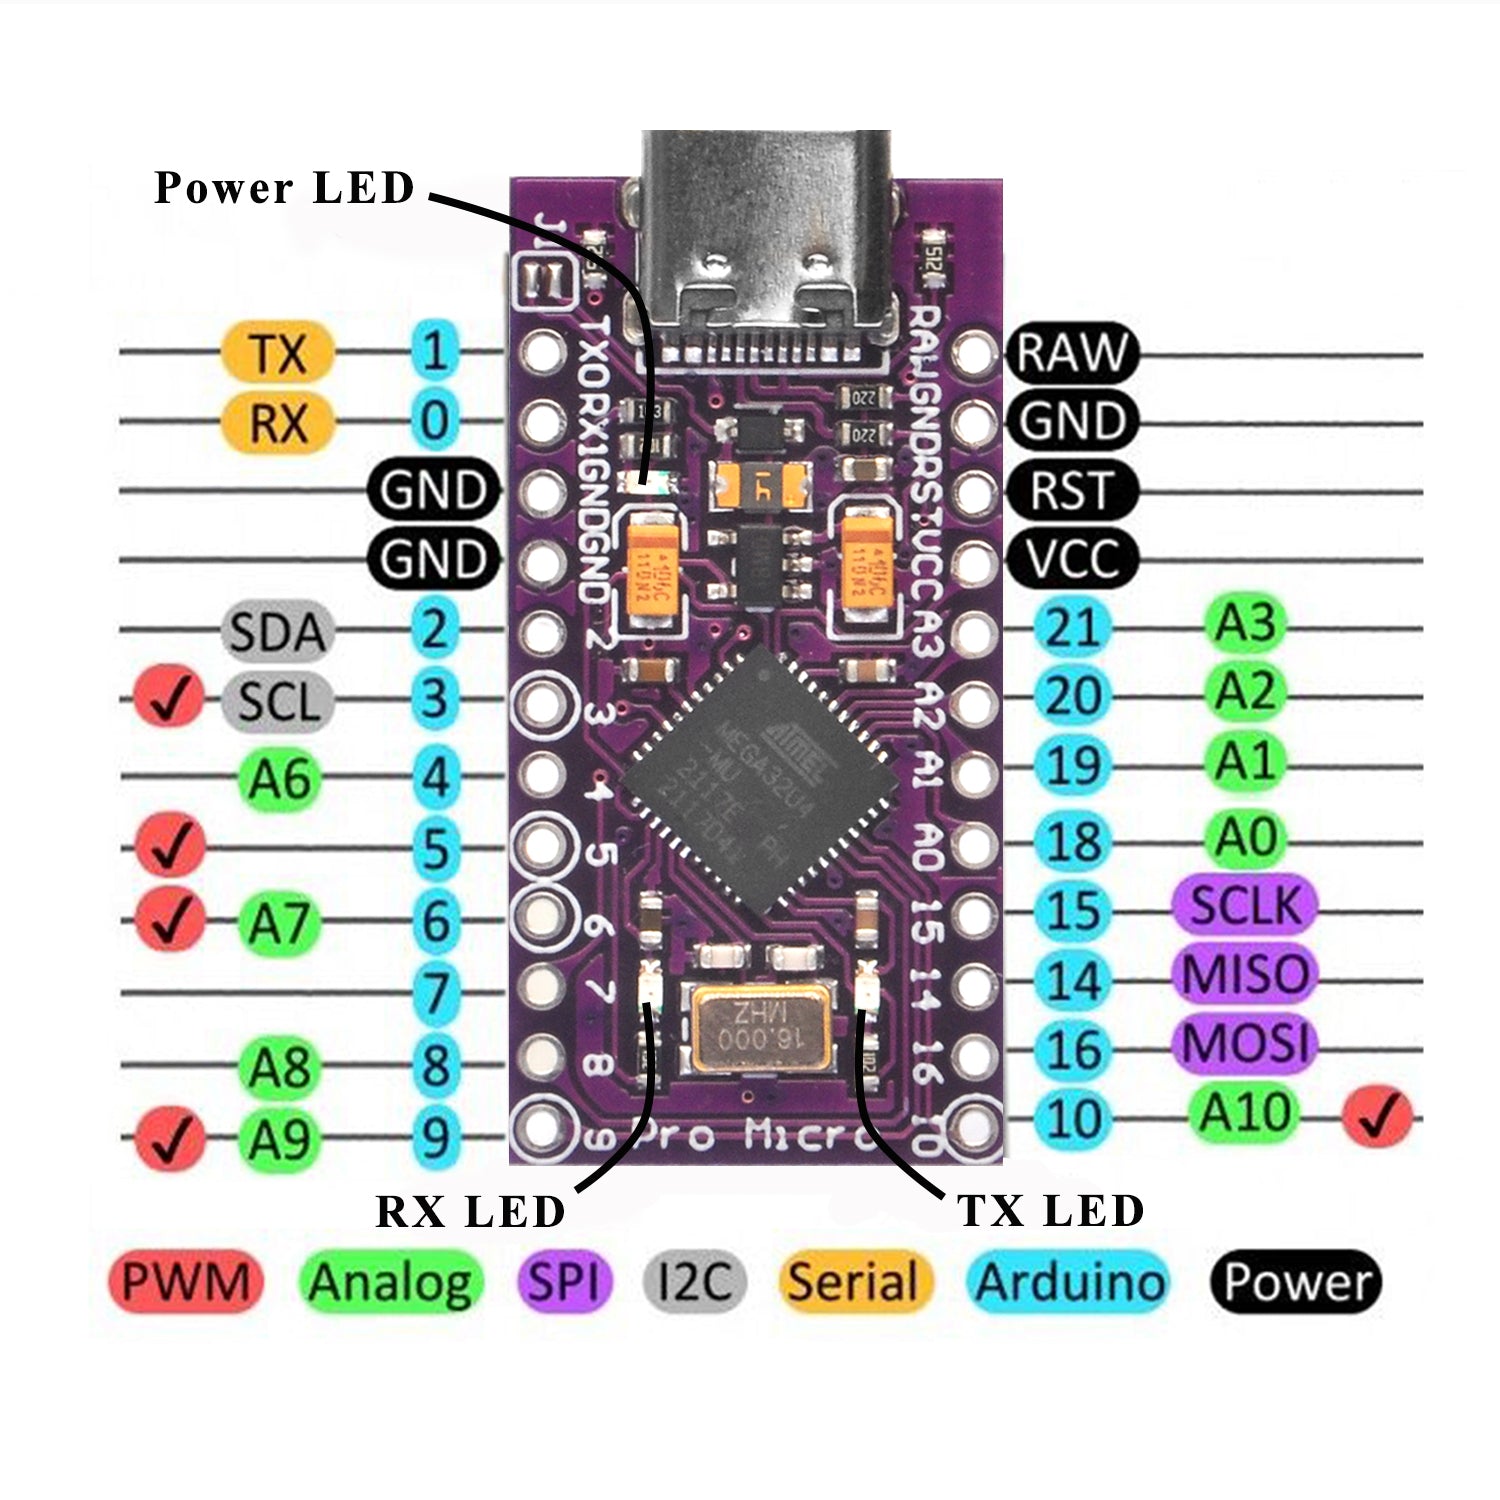 ARD PRO-MICRO: Arduino - Microcontroller, ATMega32U4, USB at